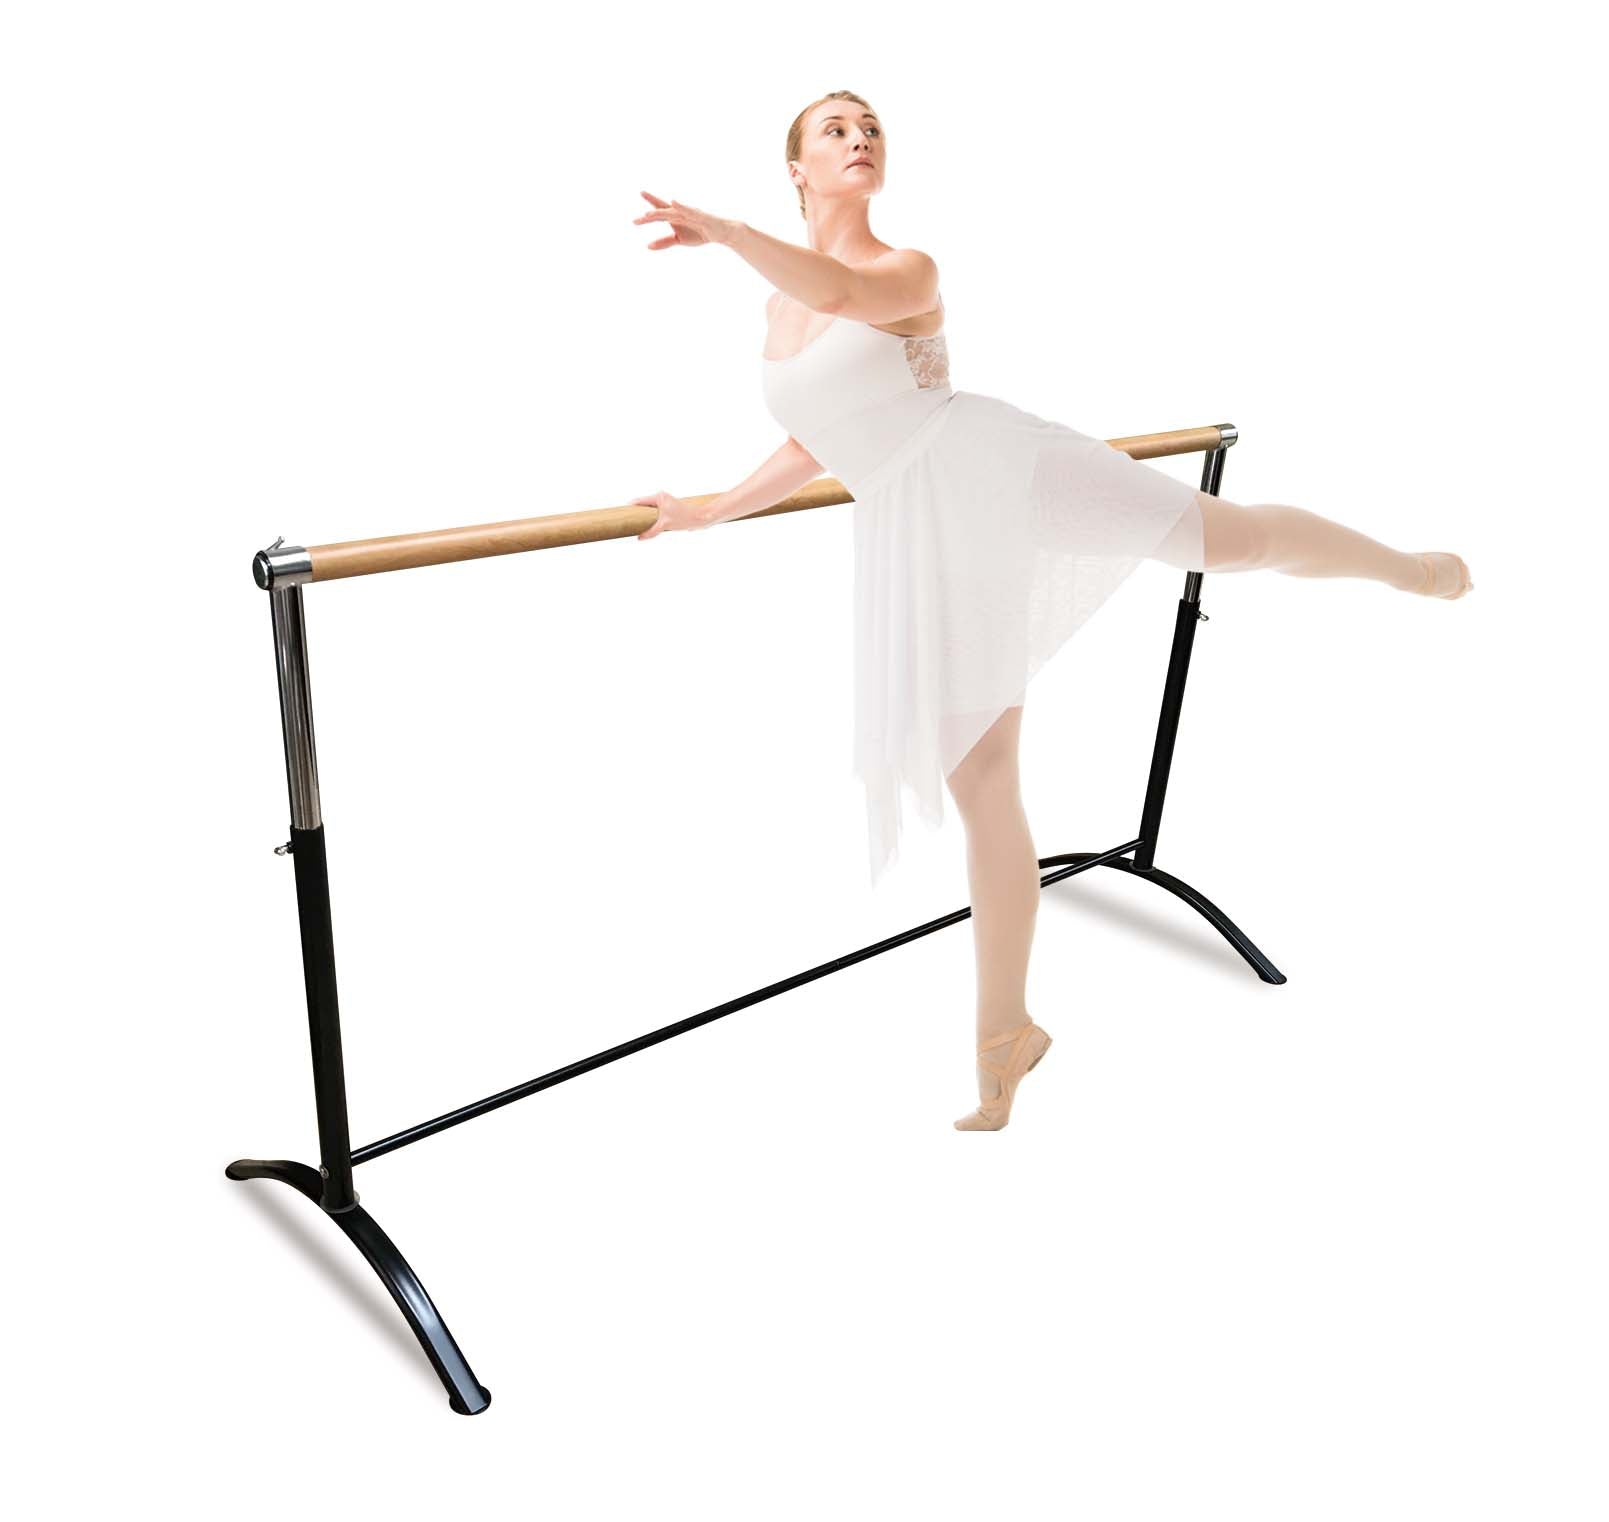 ArtAn Balance - Ballet Barres and more (artanbalance) - Profile